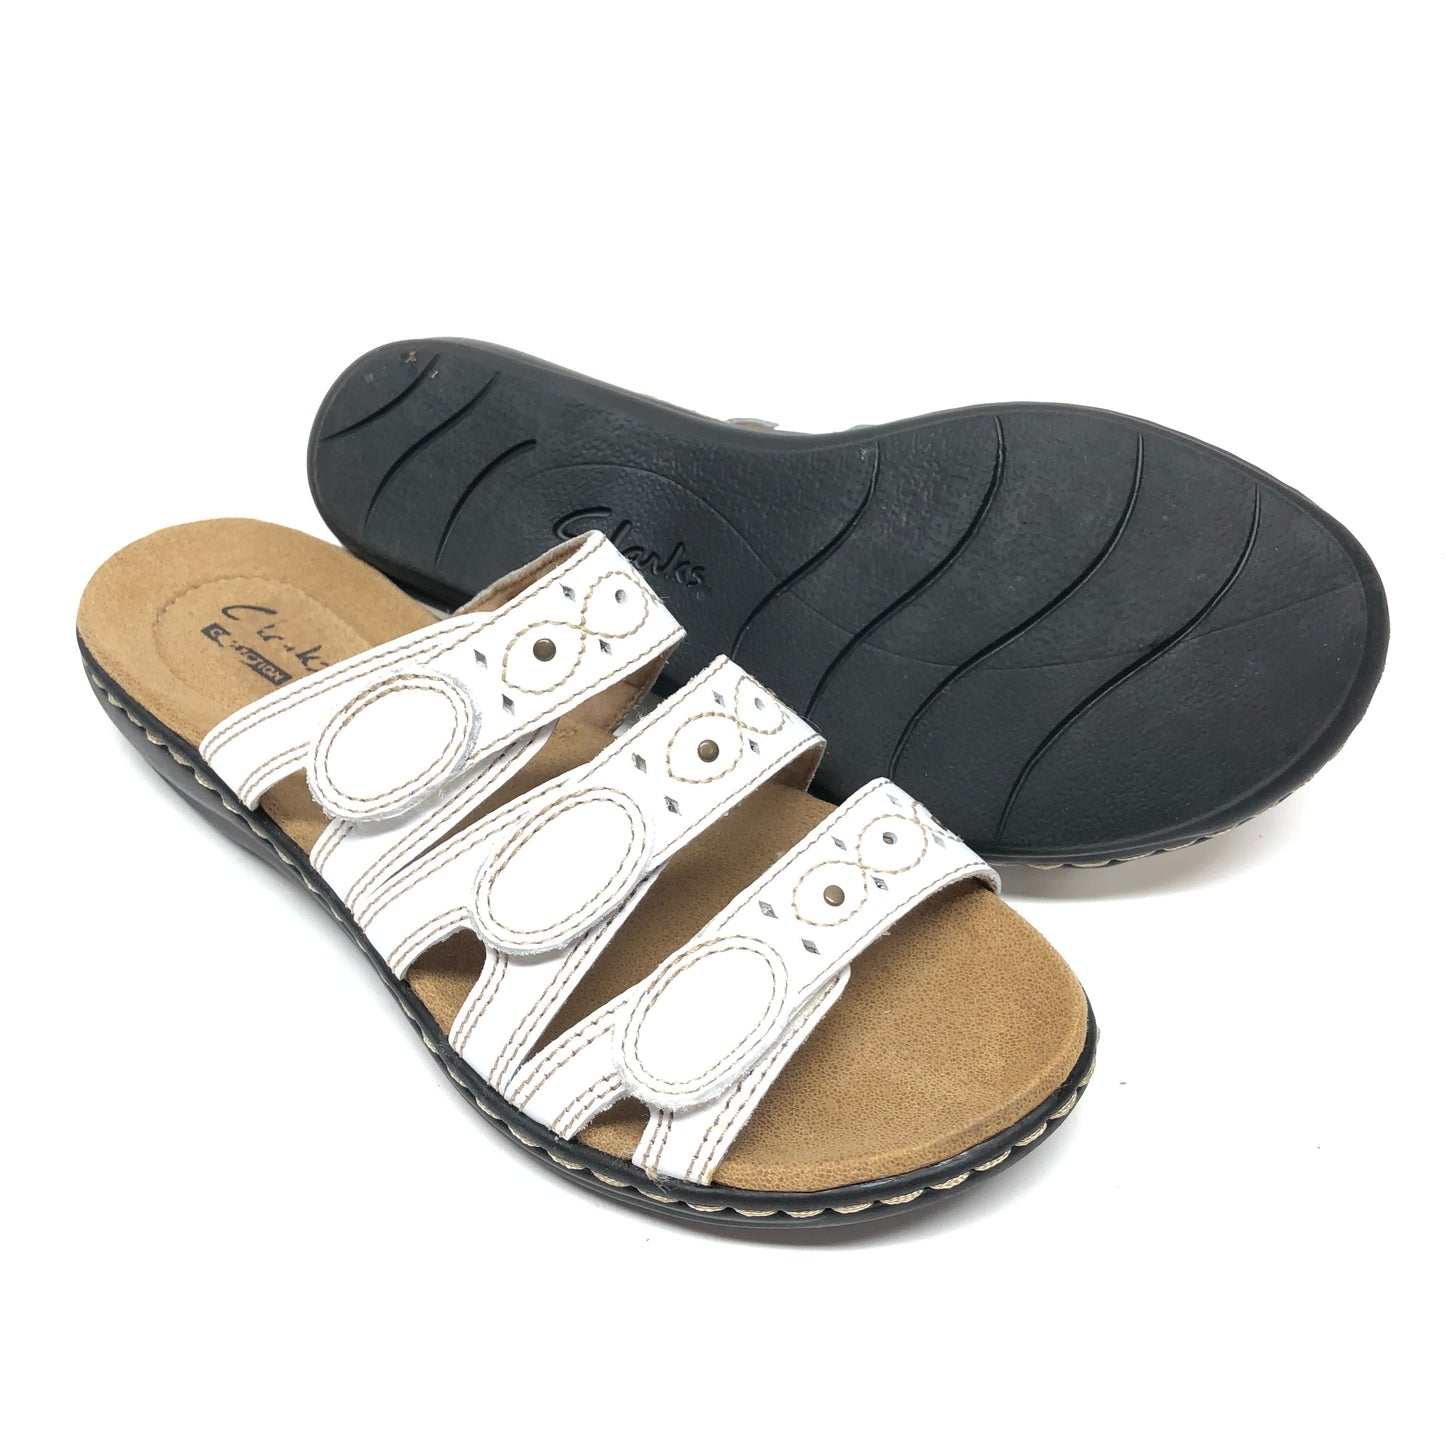 White Sandals Flats Clarks, Size 6